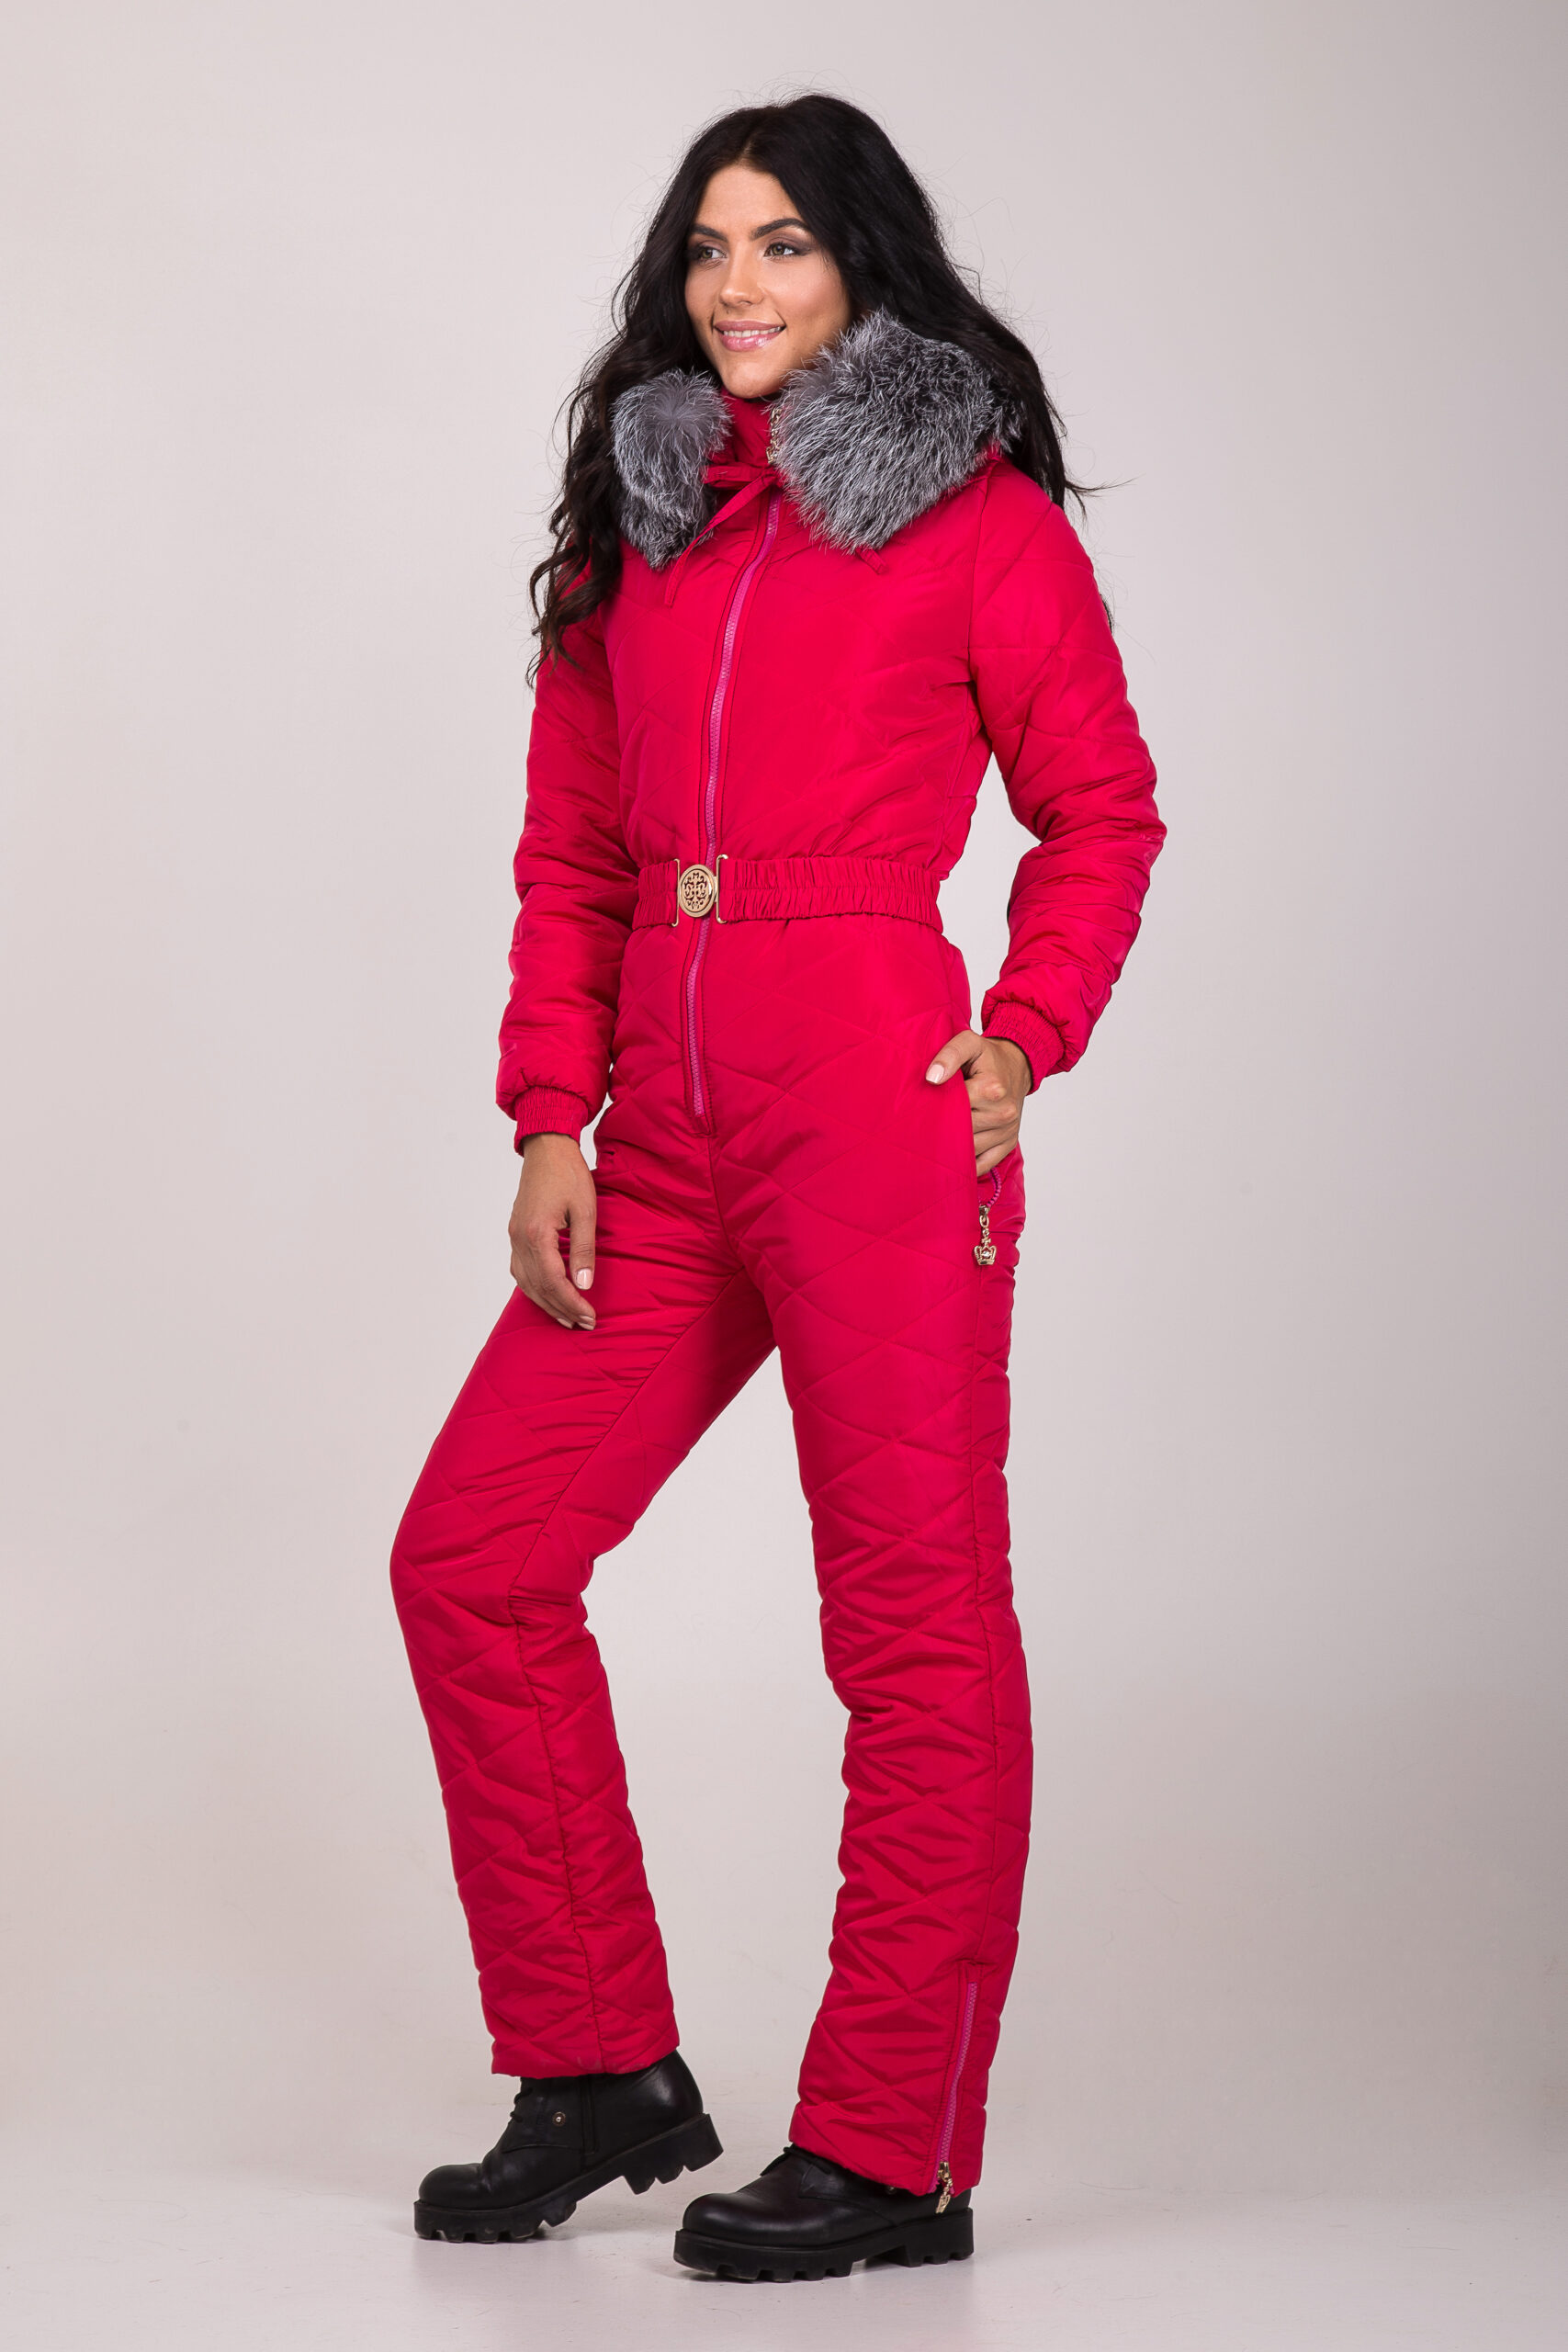 Crimson ski suit - Winter Ski suit - suit.ski